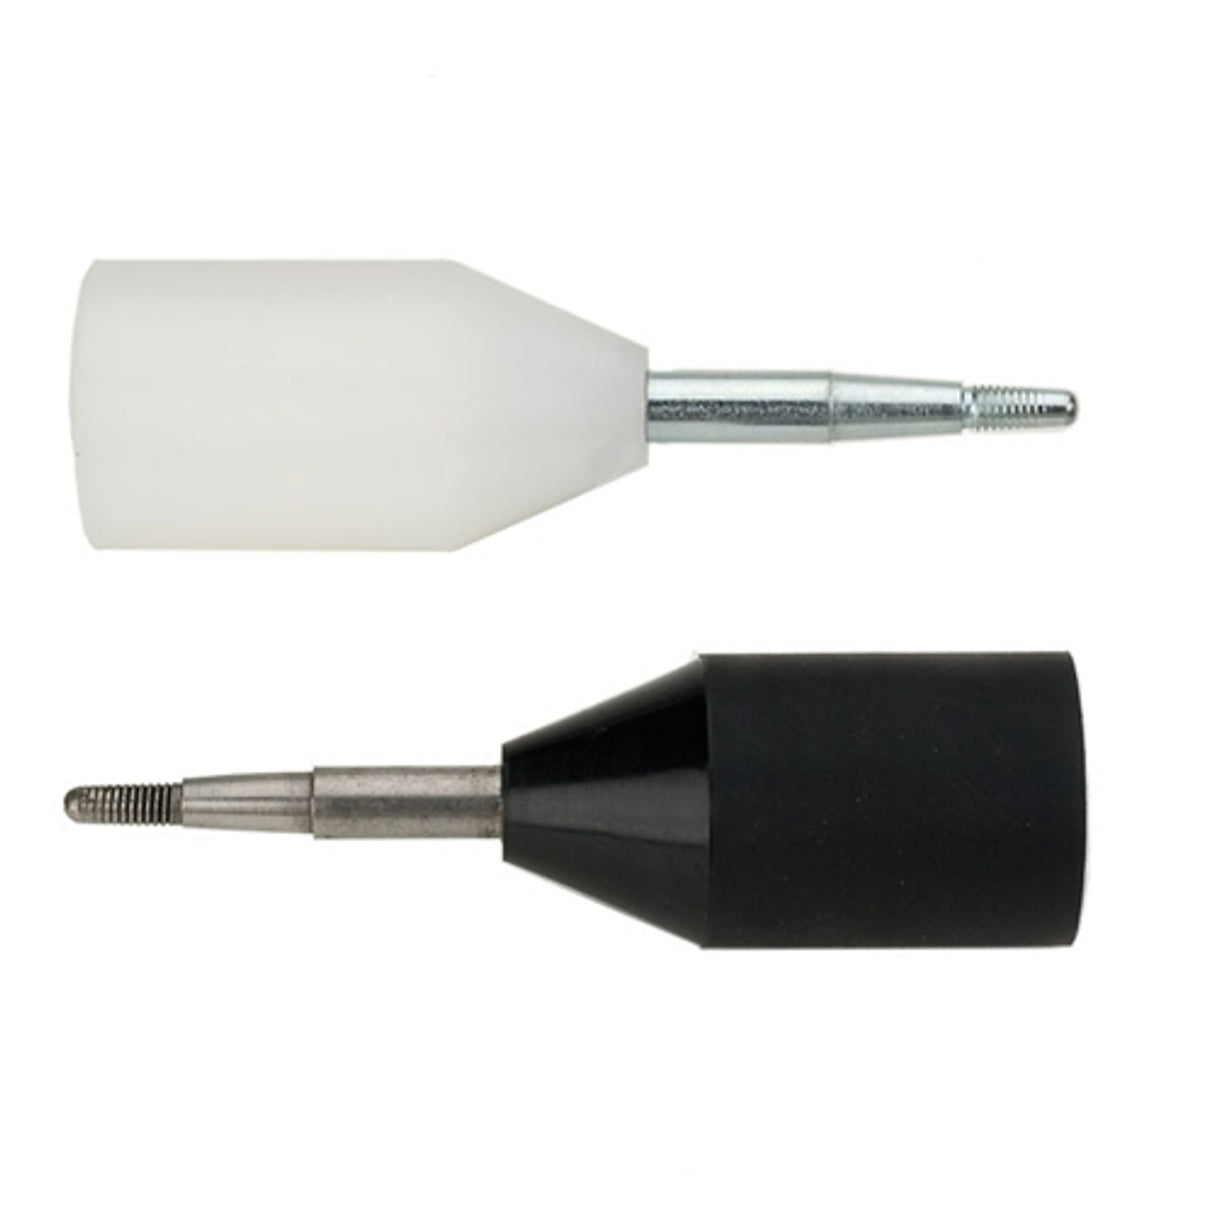 Plastic Spindles for SUPRA® "MK"® Brushes